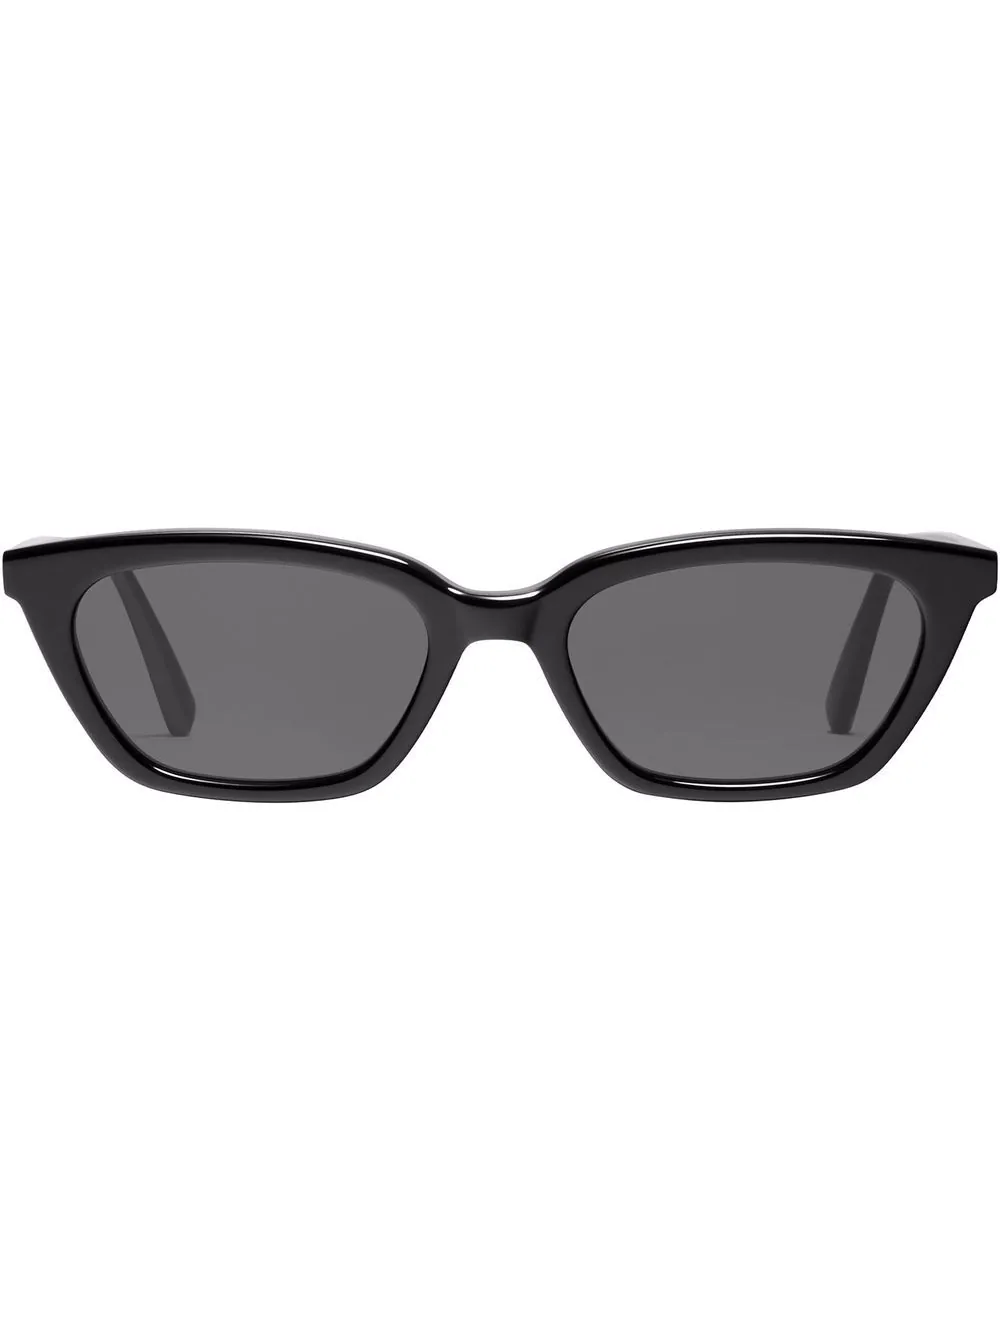 GENTLE MONSTER LOTI 01 Sunglasses